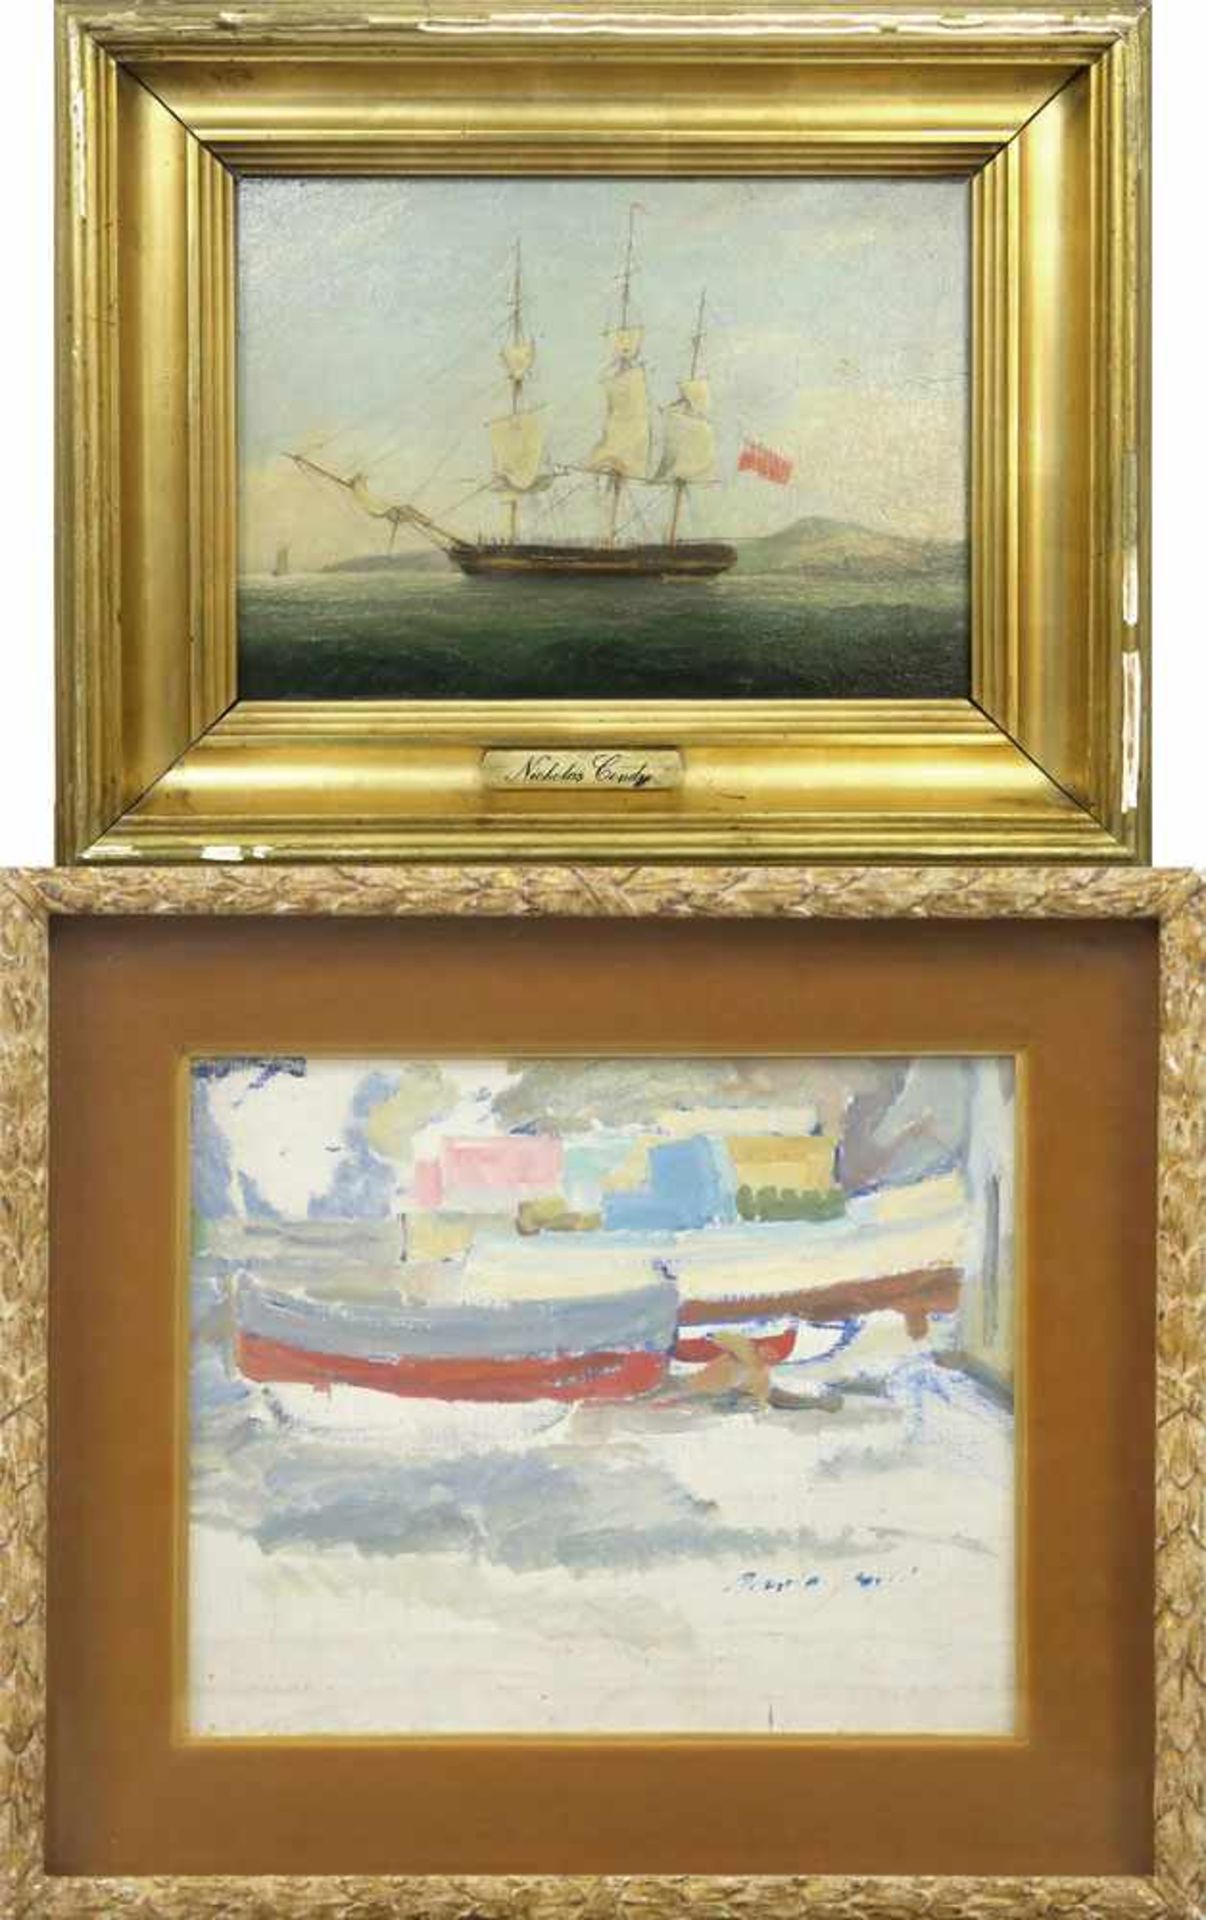 Unbekannt19./20. Jh.Segelschiff / BooteZwei Gemälde. Öl/Holz bzw. Öl/Lwd./Karton. 22 x 28,5 cm